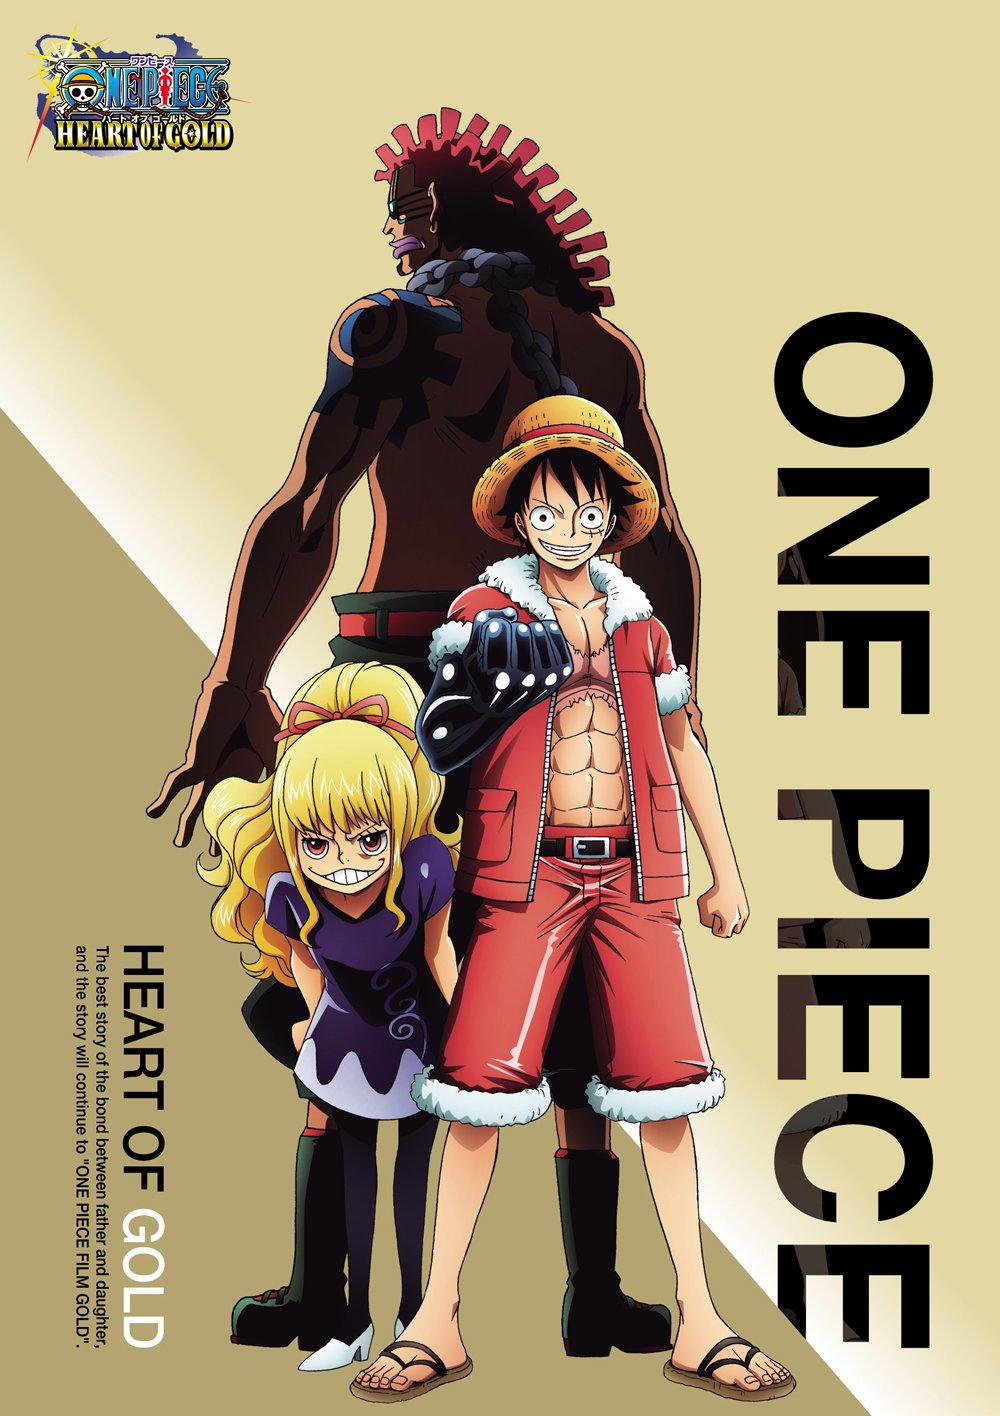 One Piece - Heart of Gold - VGMdb